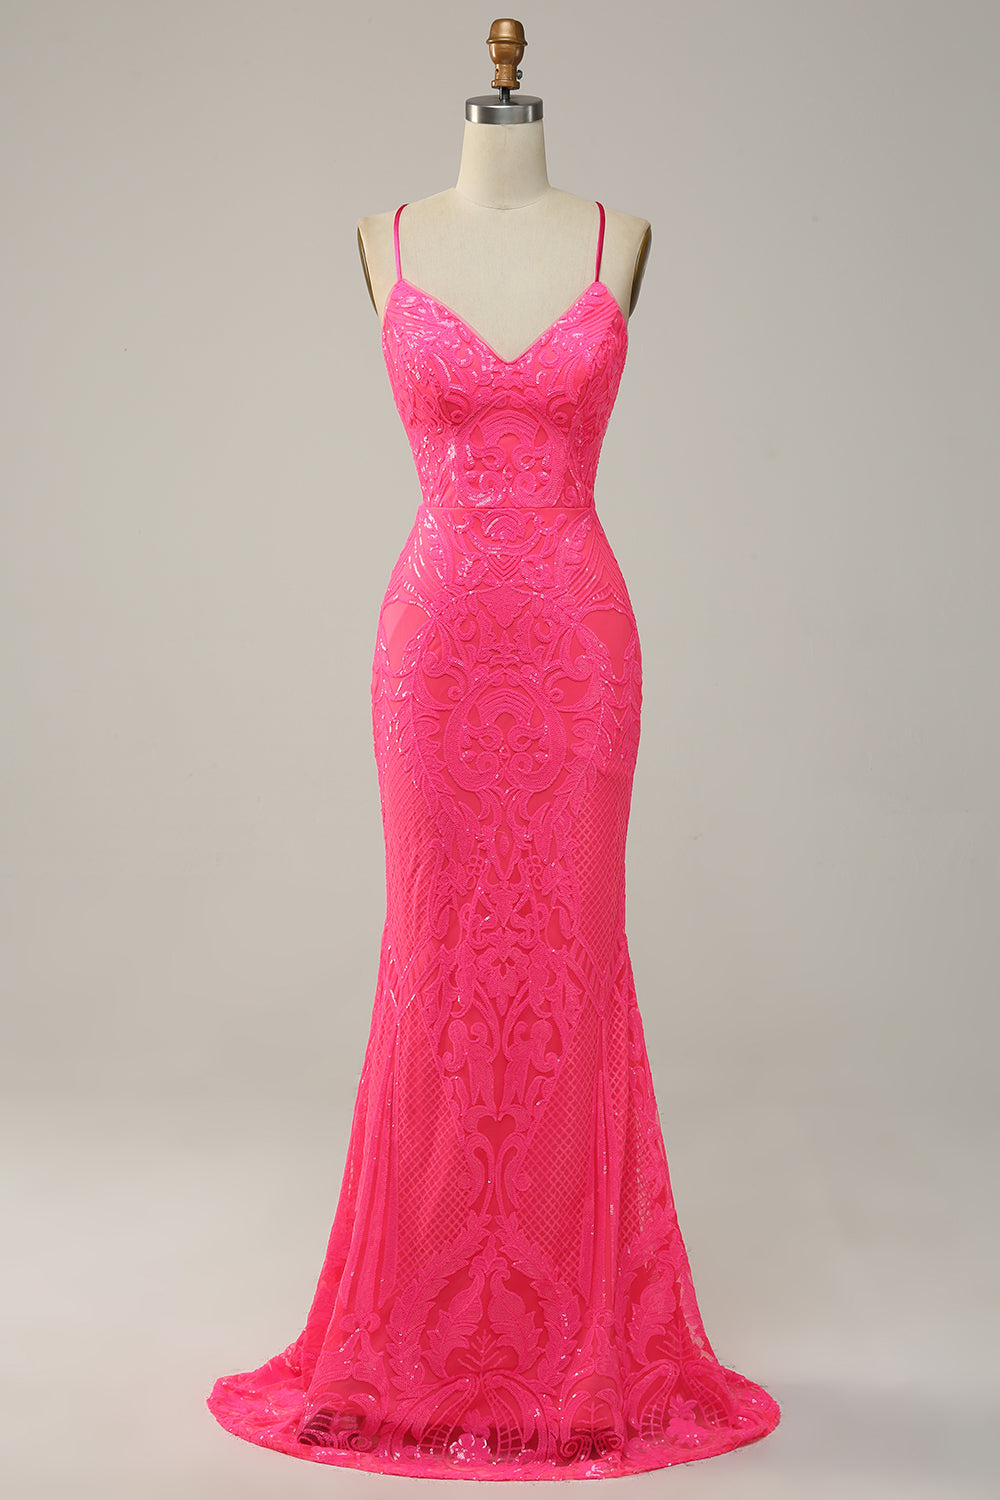 Zapakasa Women Hot Pink Prom Dress A Line Spaghetti Straps Party